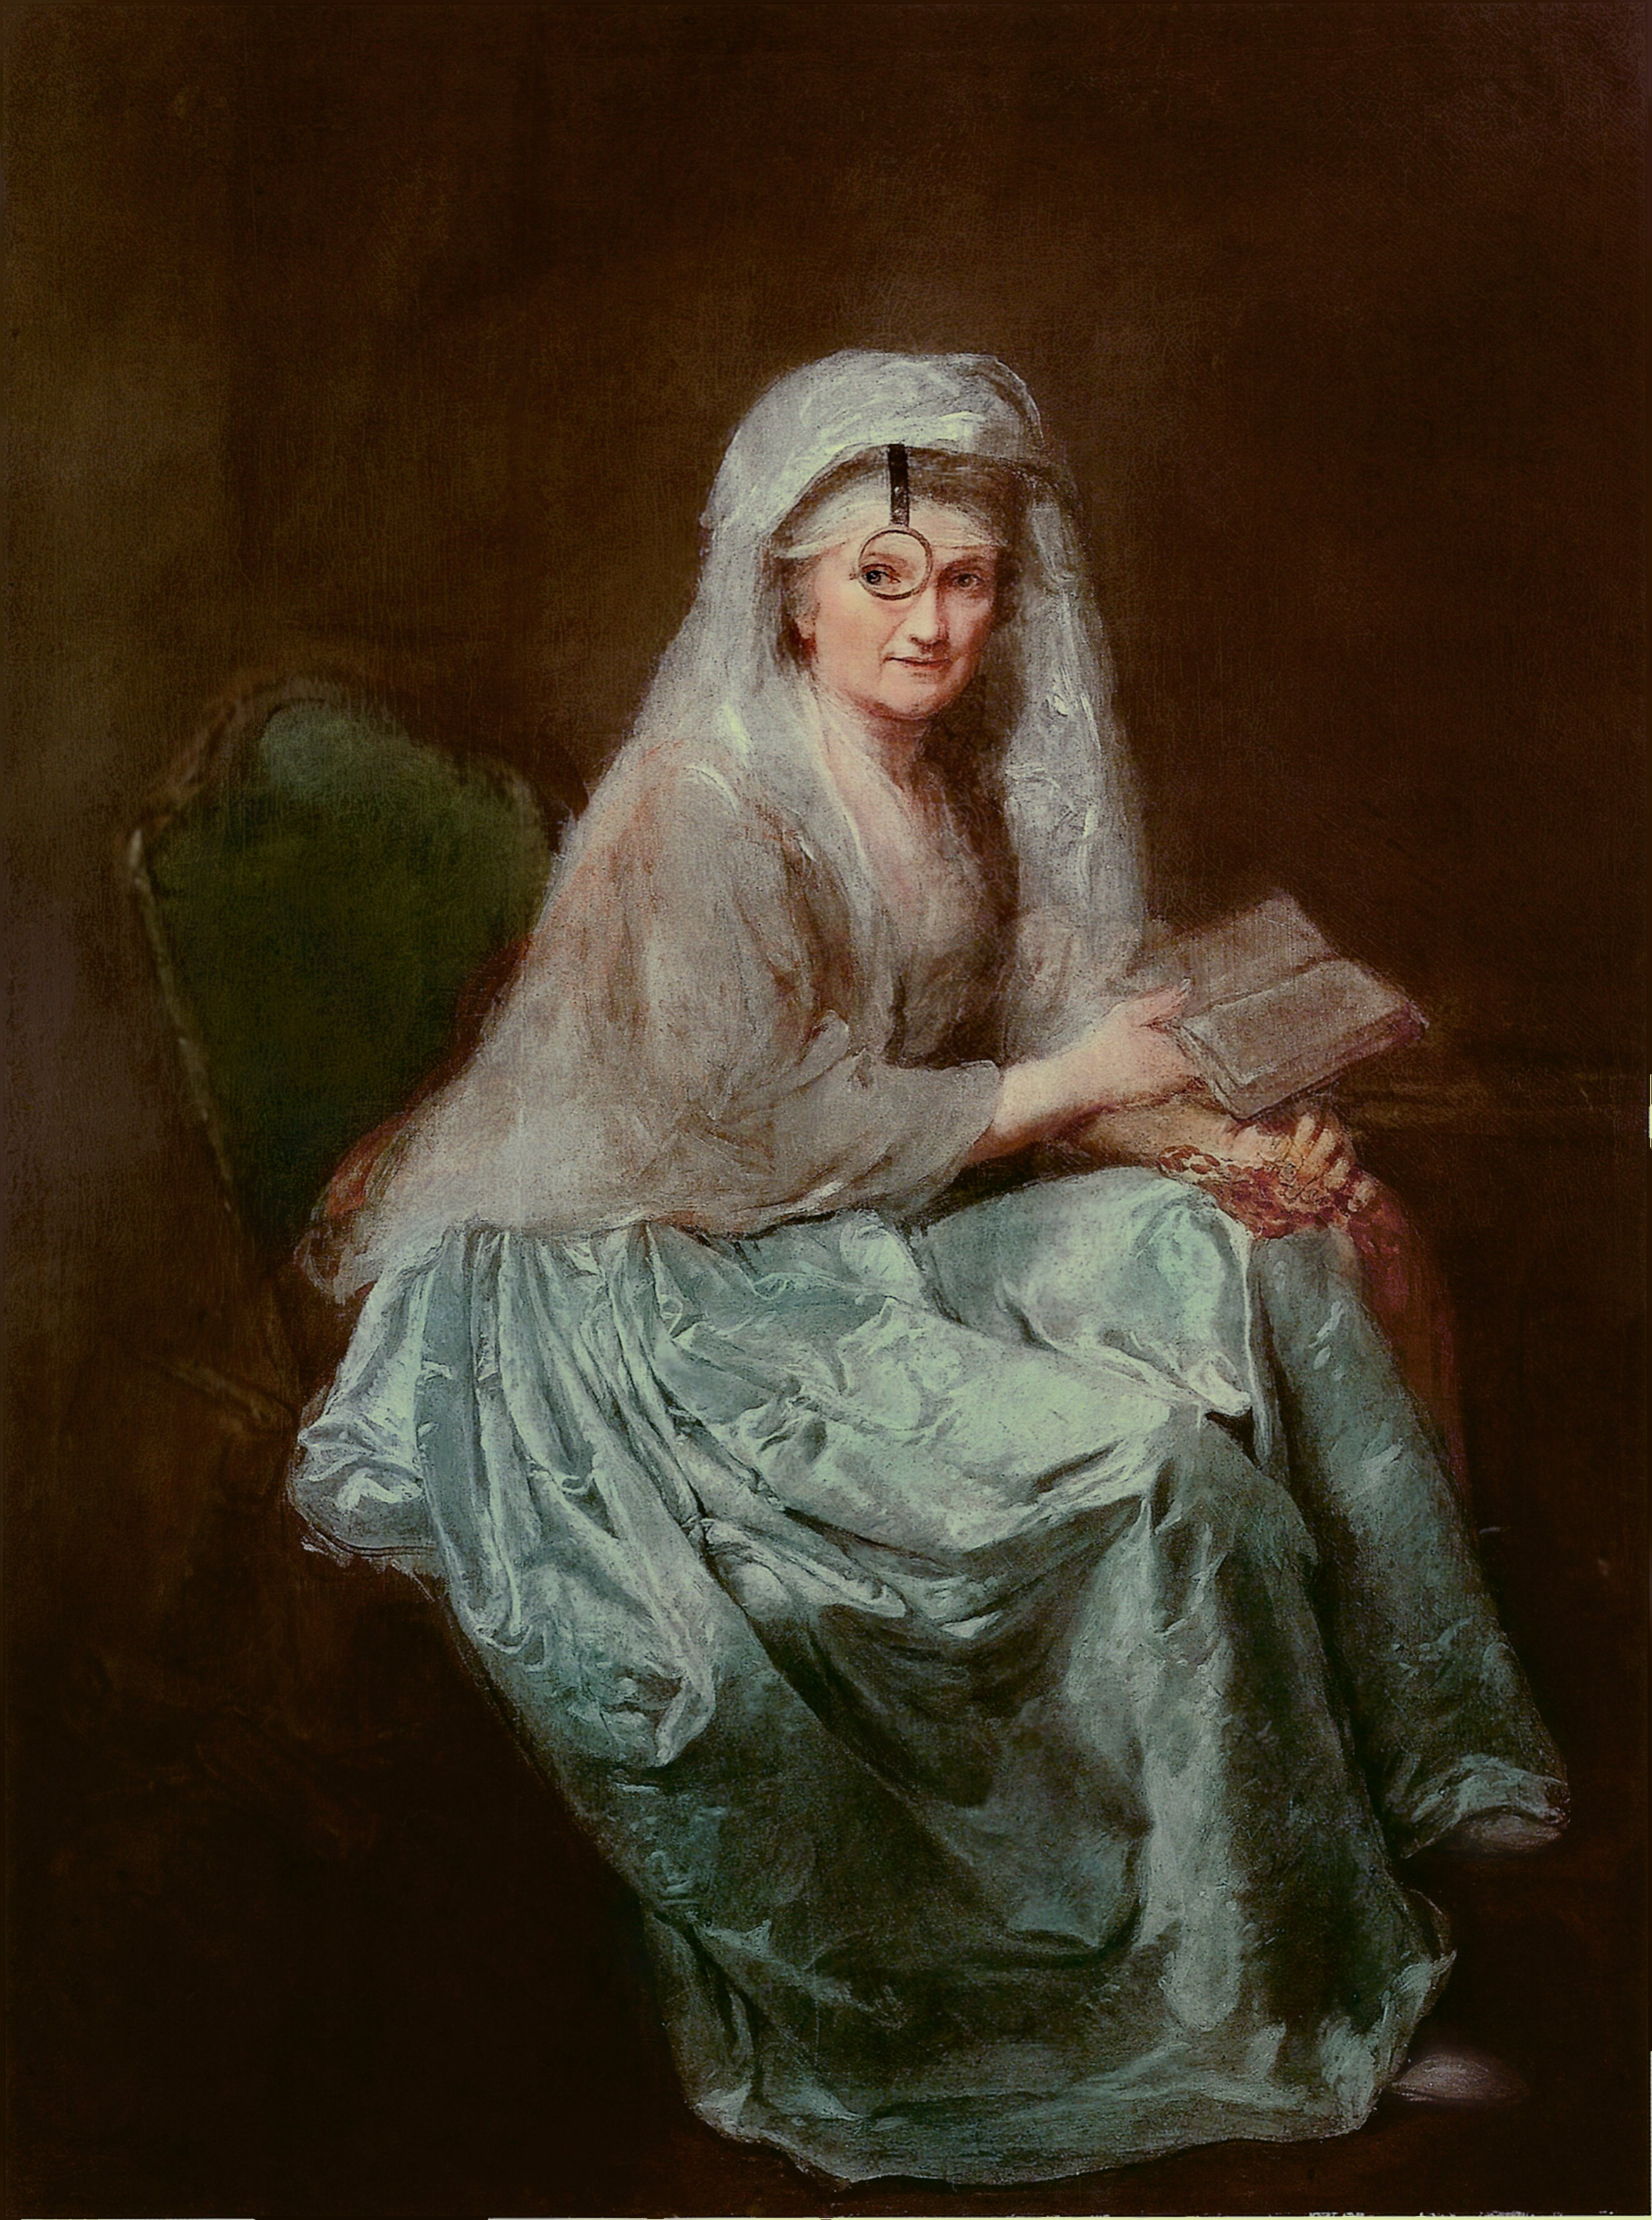 Zelfportret met Monocle by Anna Dorothea Therbusch - 1777 - 151 x 115 cm Gemäldegalerie